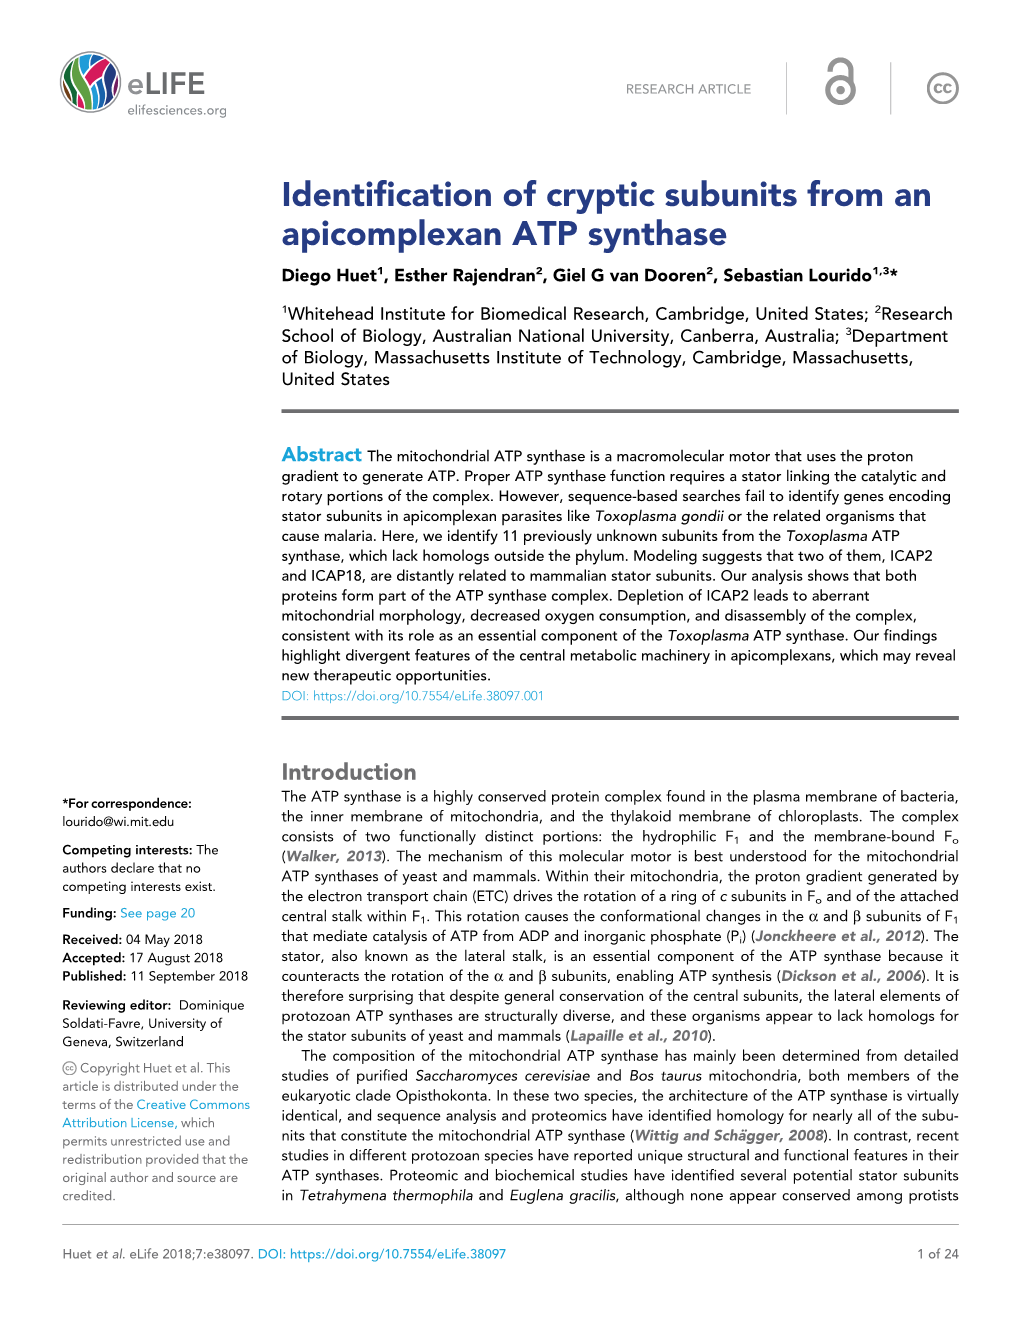 Identification of Cryptic Subunits from an Apicomplexan ATP Synthase Diego Huet1, Esther Rajendran2, Giel G Van Dooren2, Sebastian Lourido1,3*